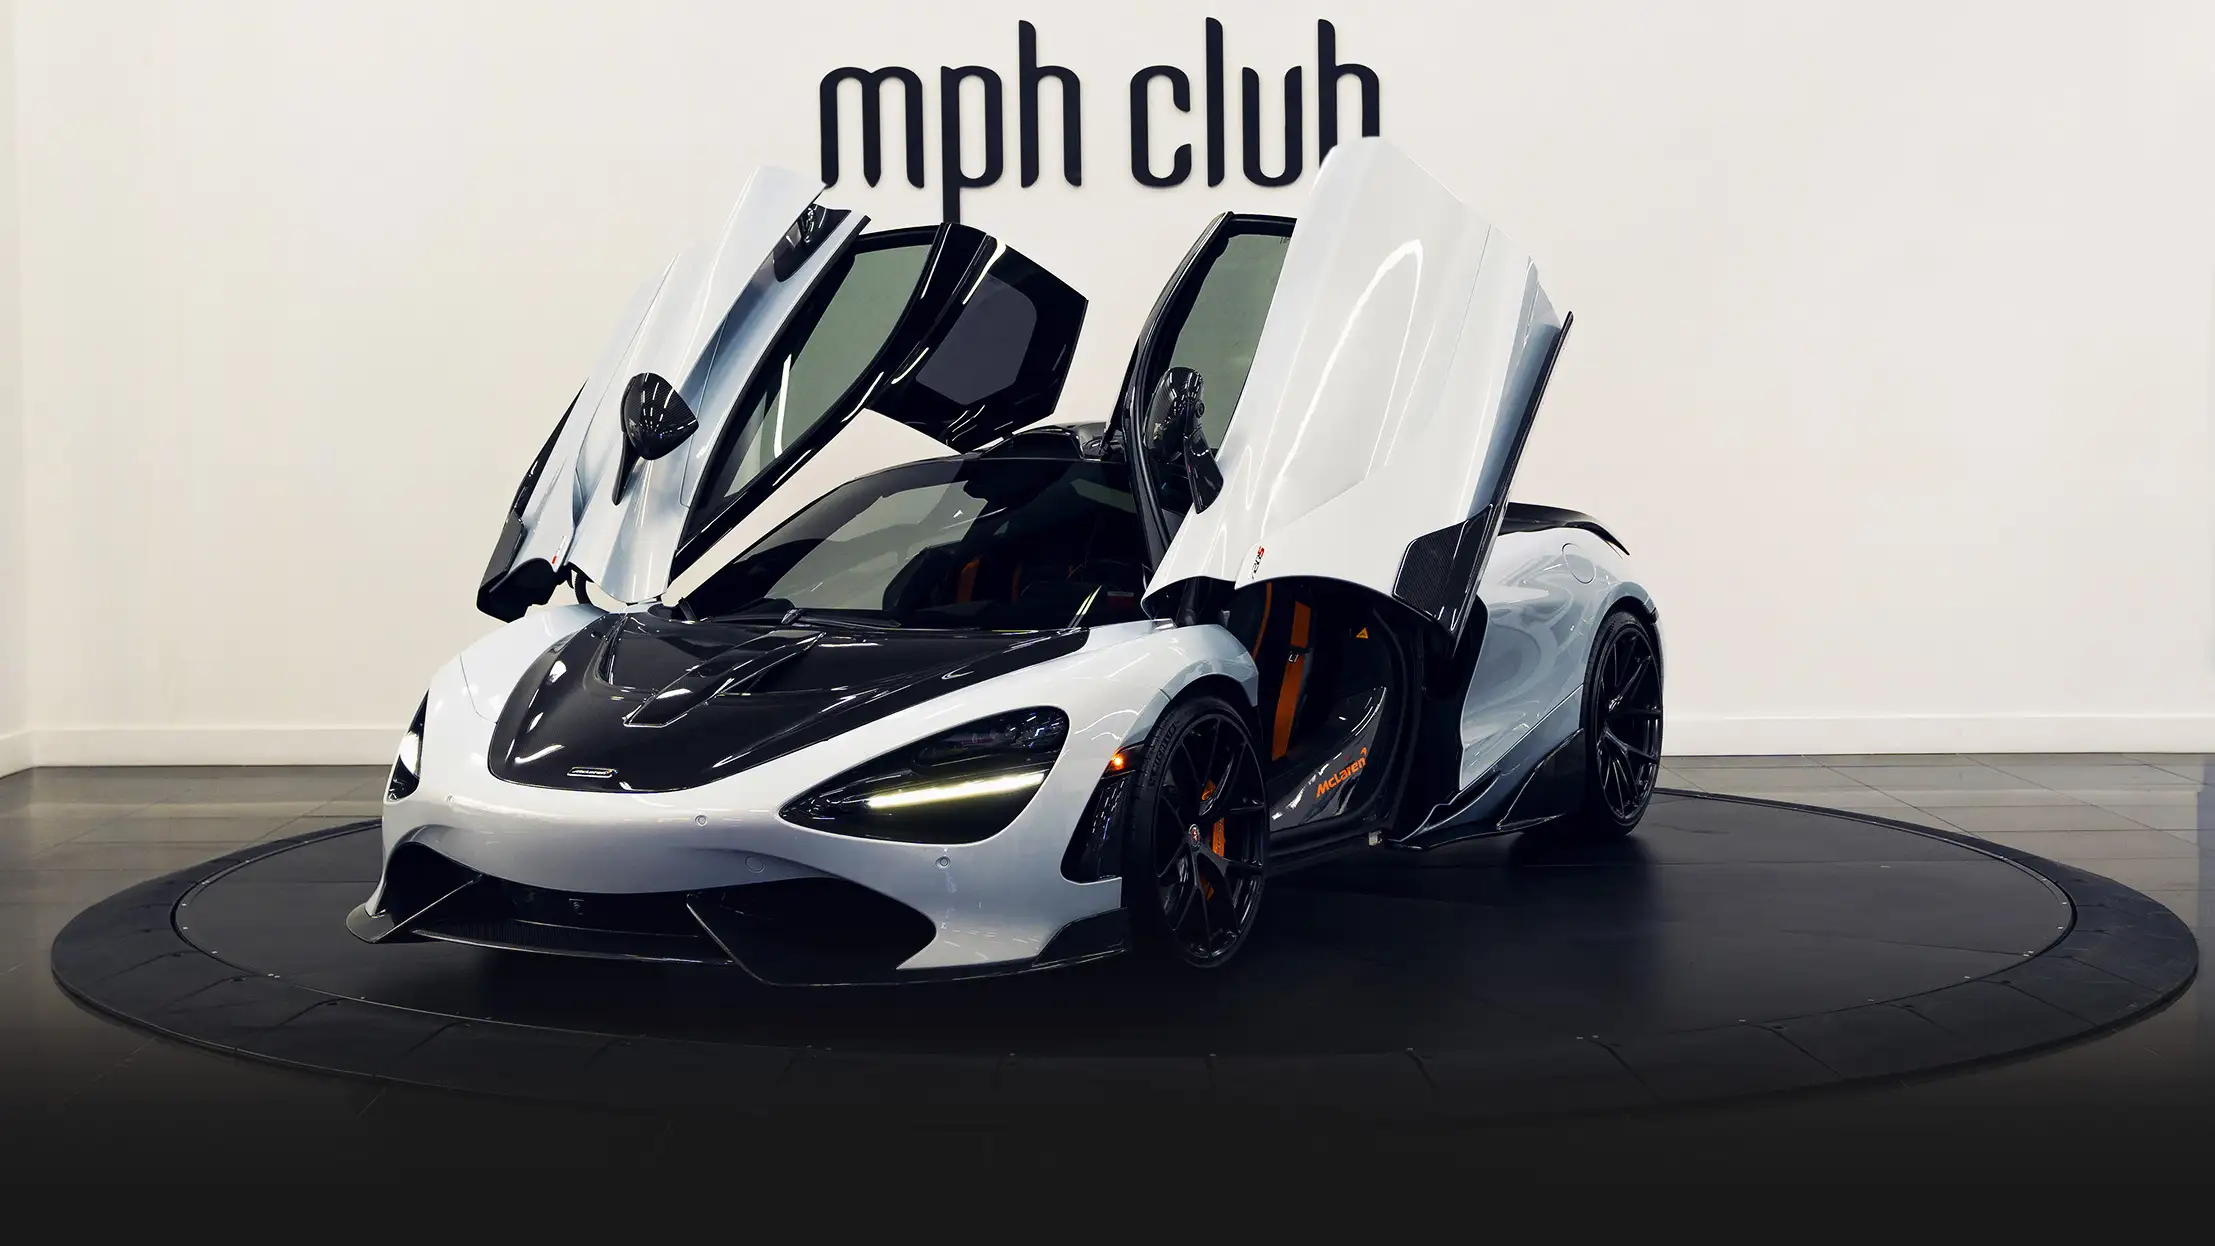 White with orange McLaren 720s rental profile view - mph club 2